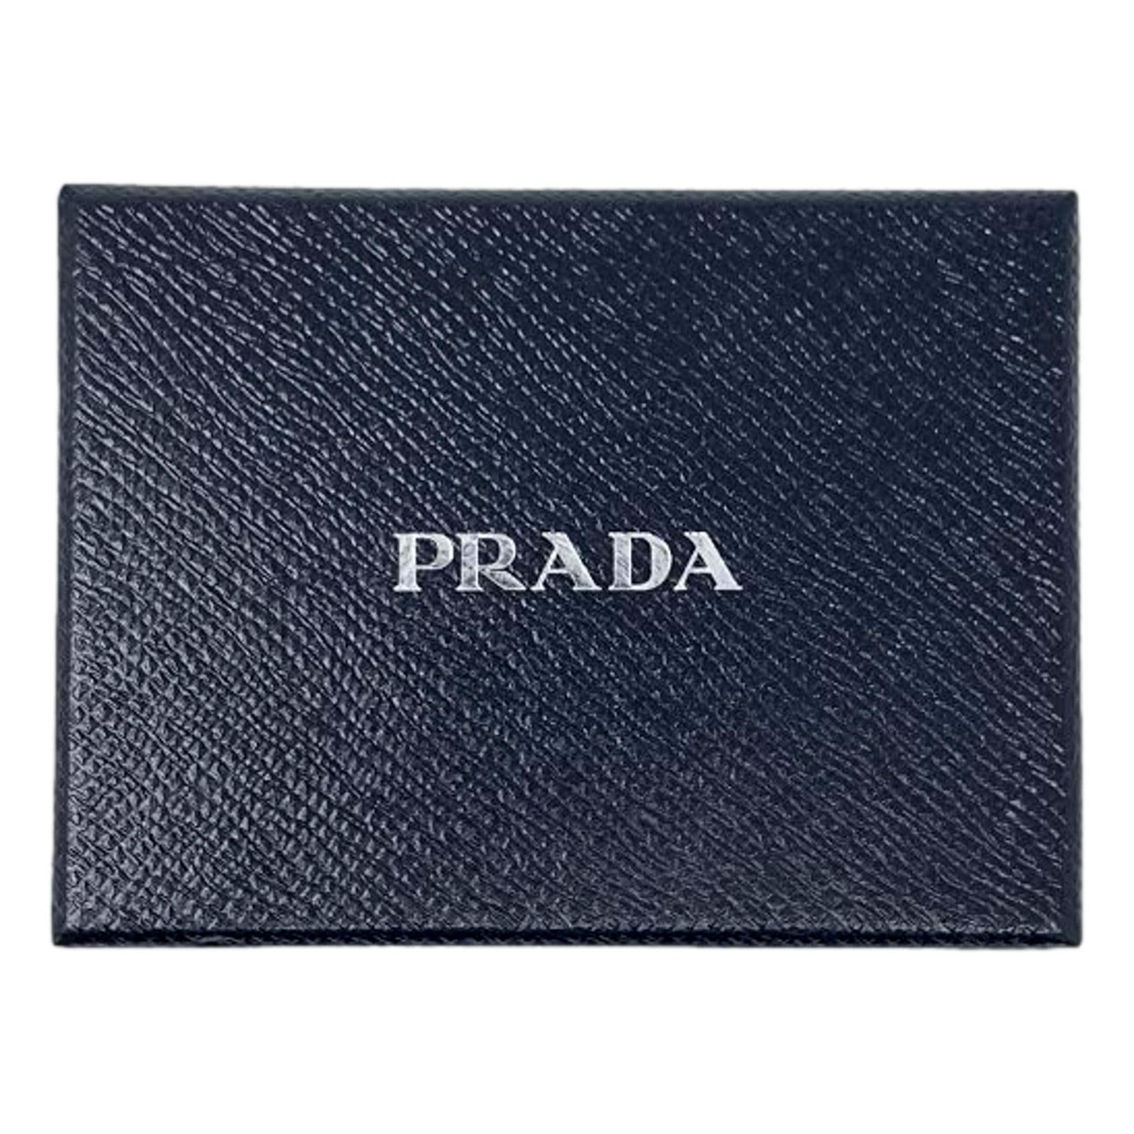 Prada Lipstick Plaque Black Saffiano Leather ID Cardholder Lanyard (New) - Image 4 of 4